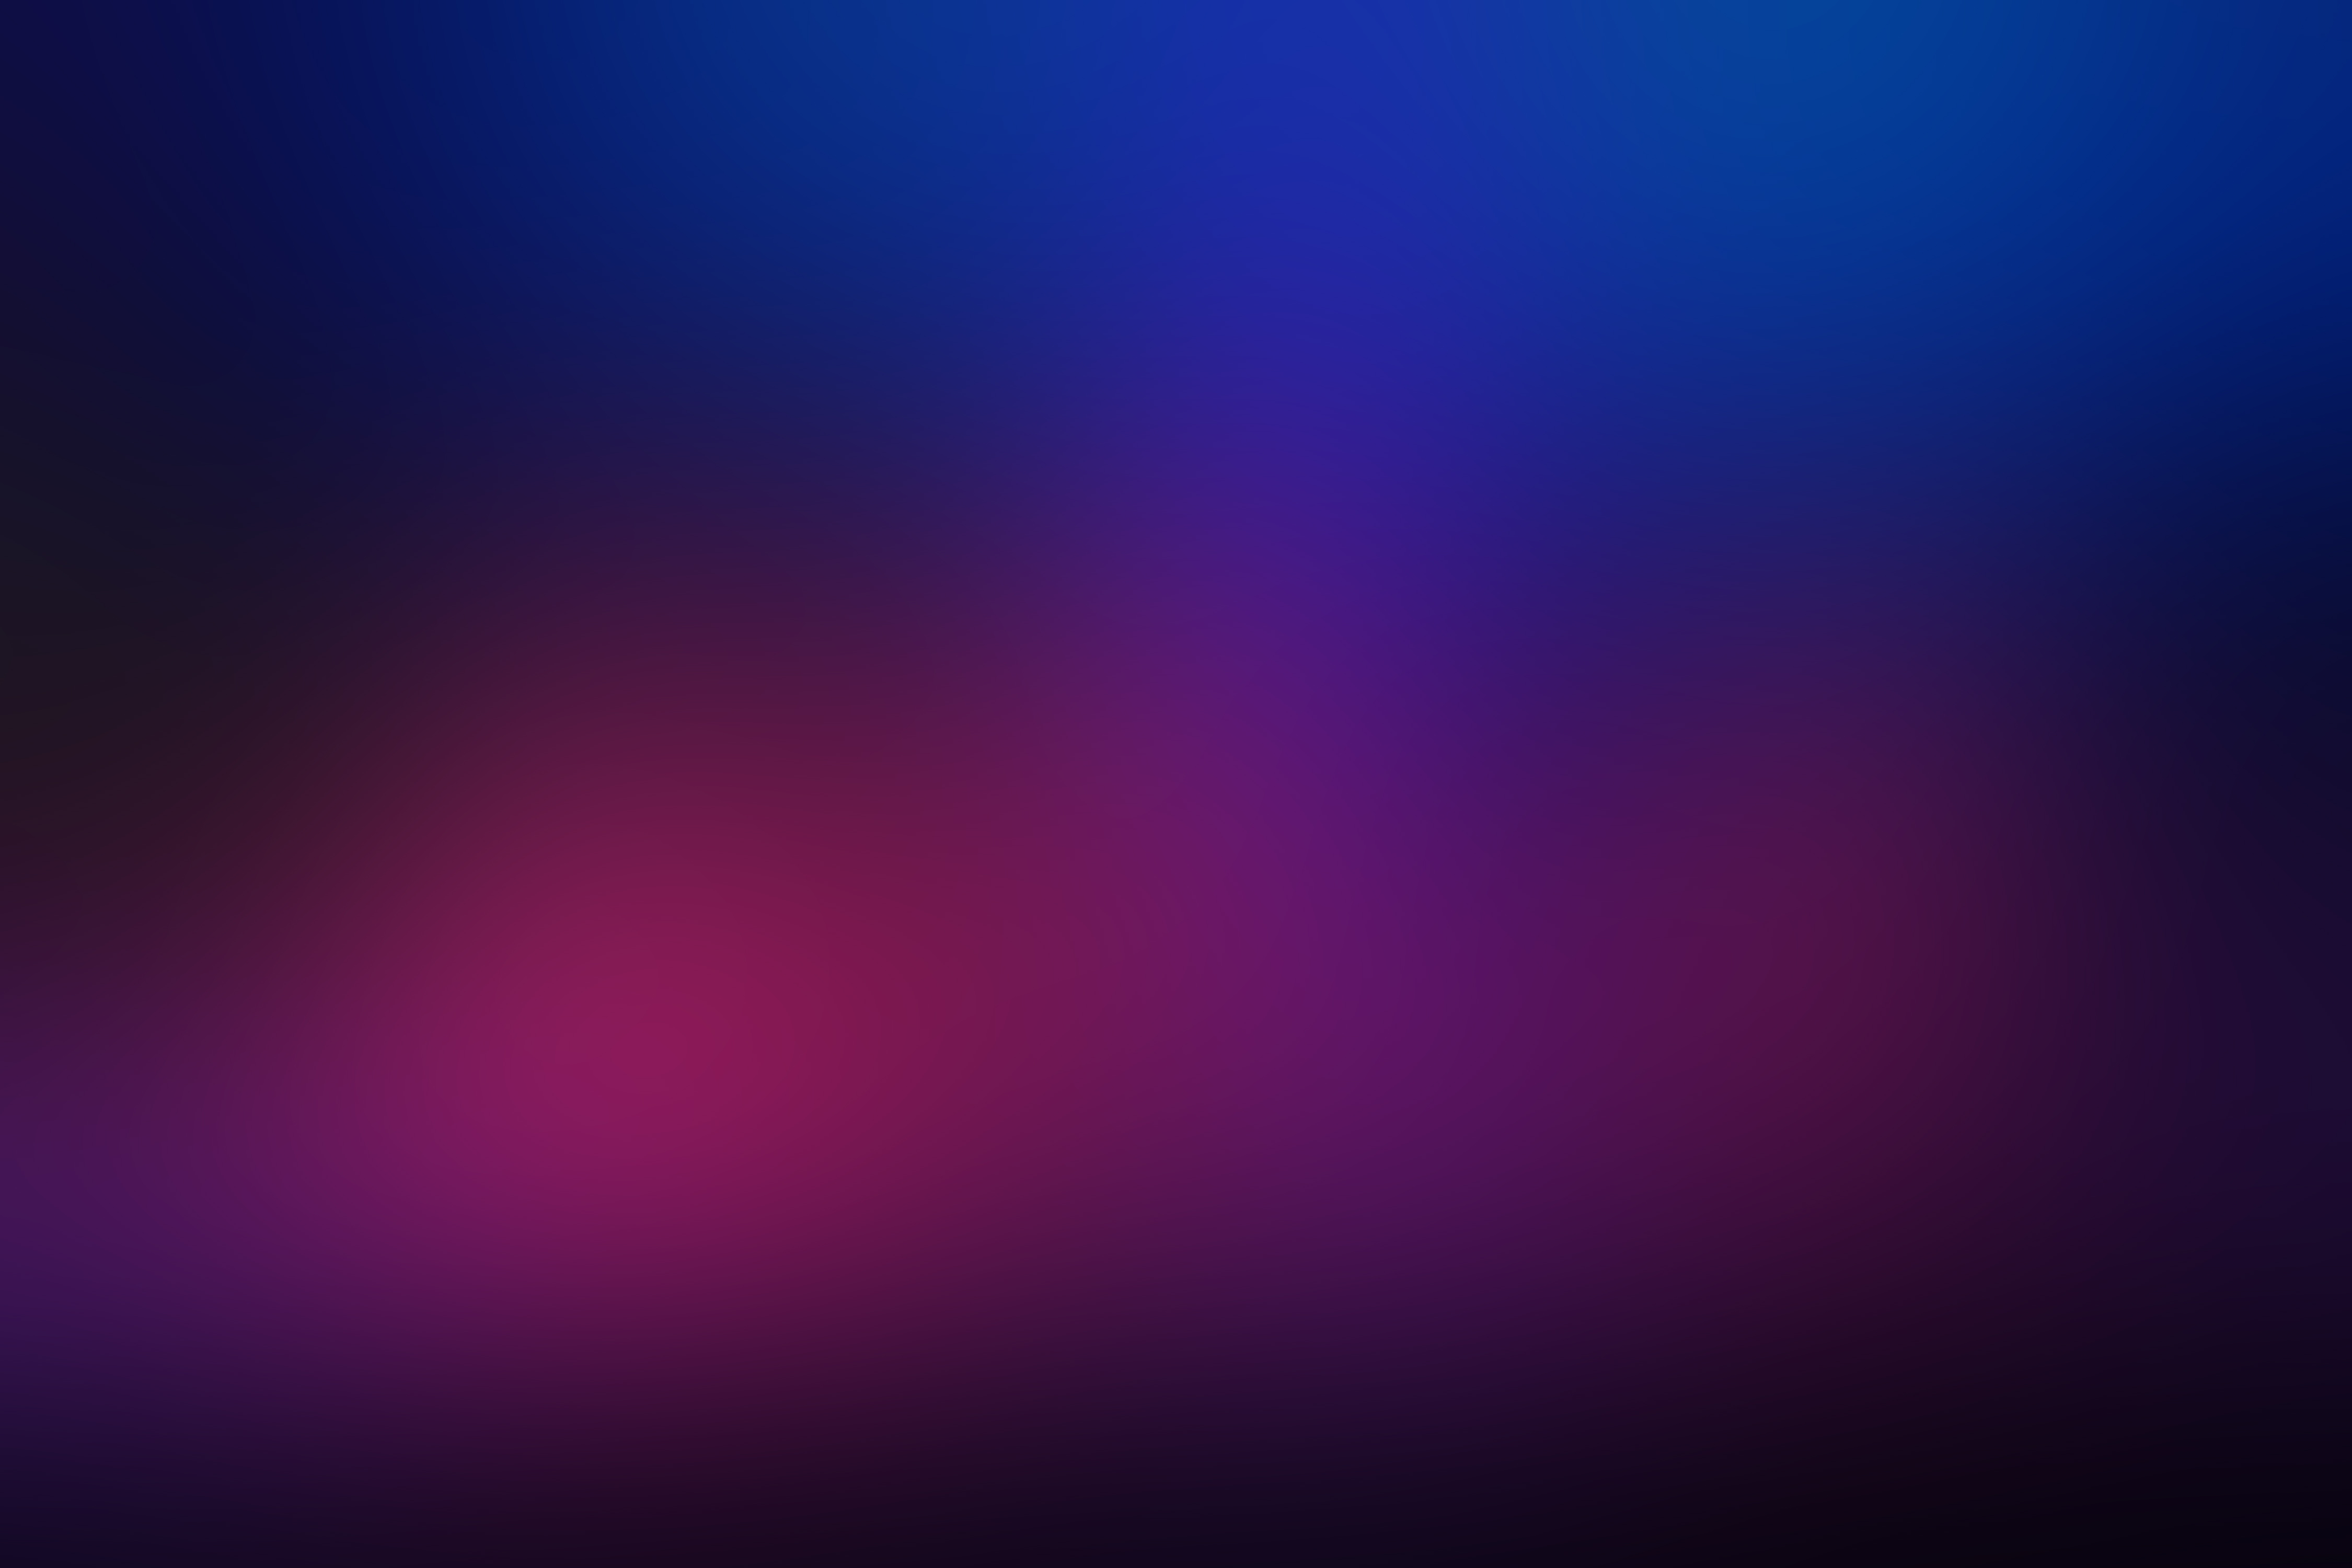 Blurred Nightclub Photo Background